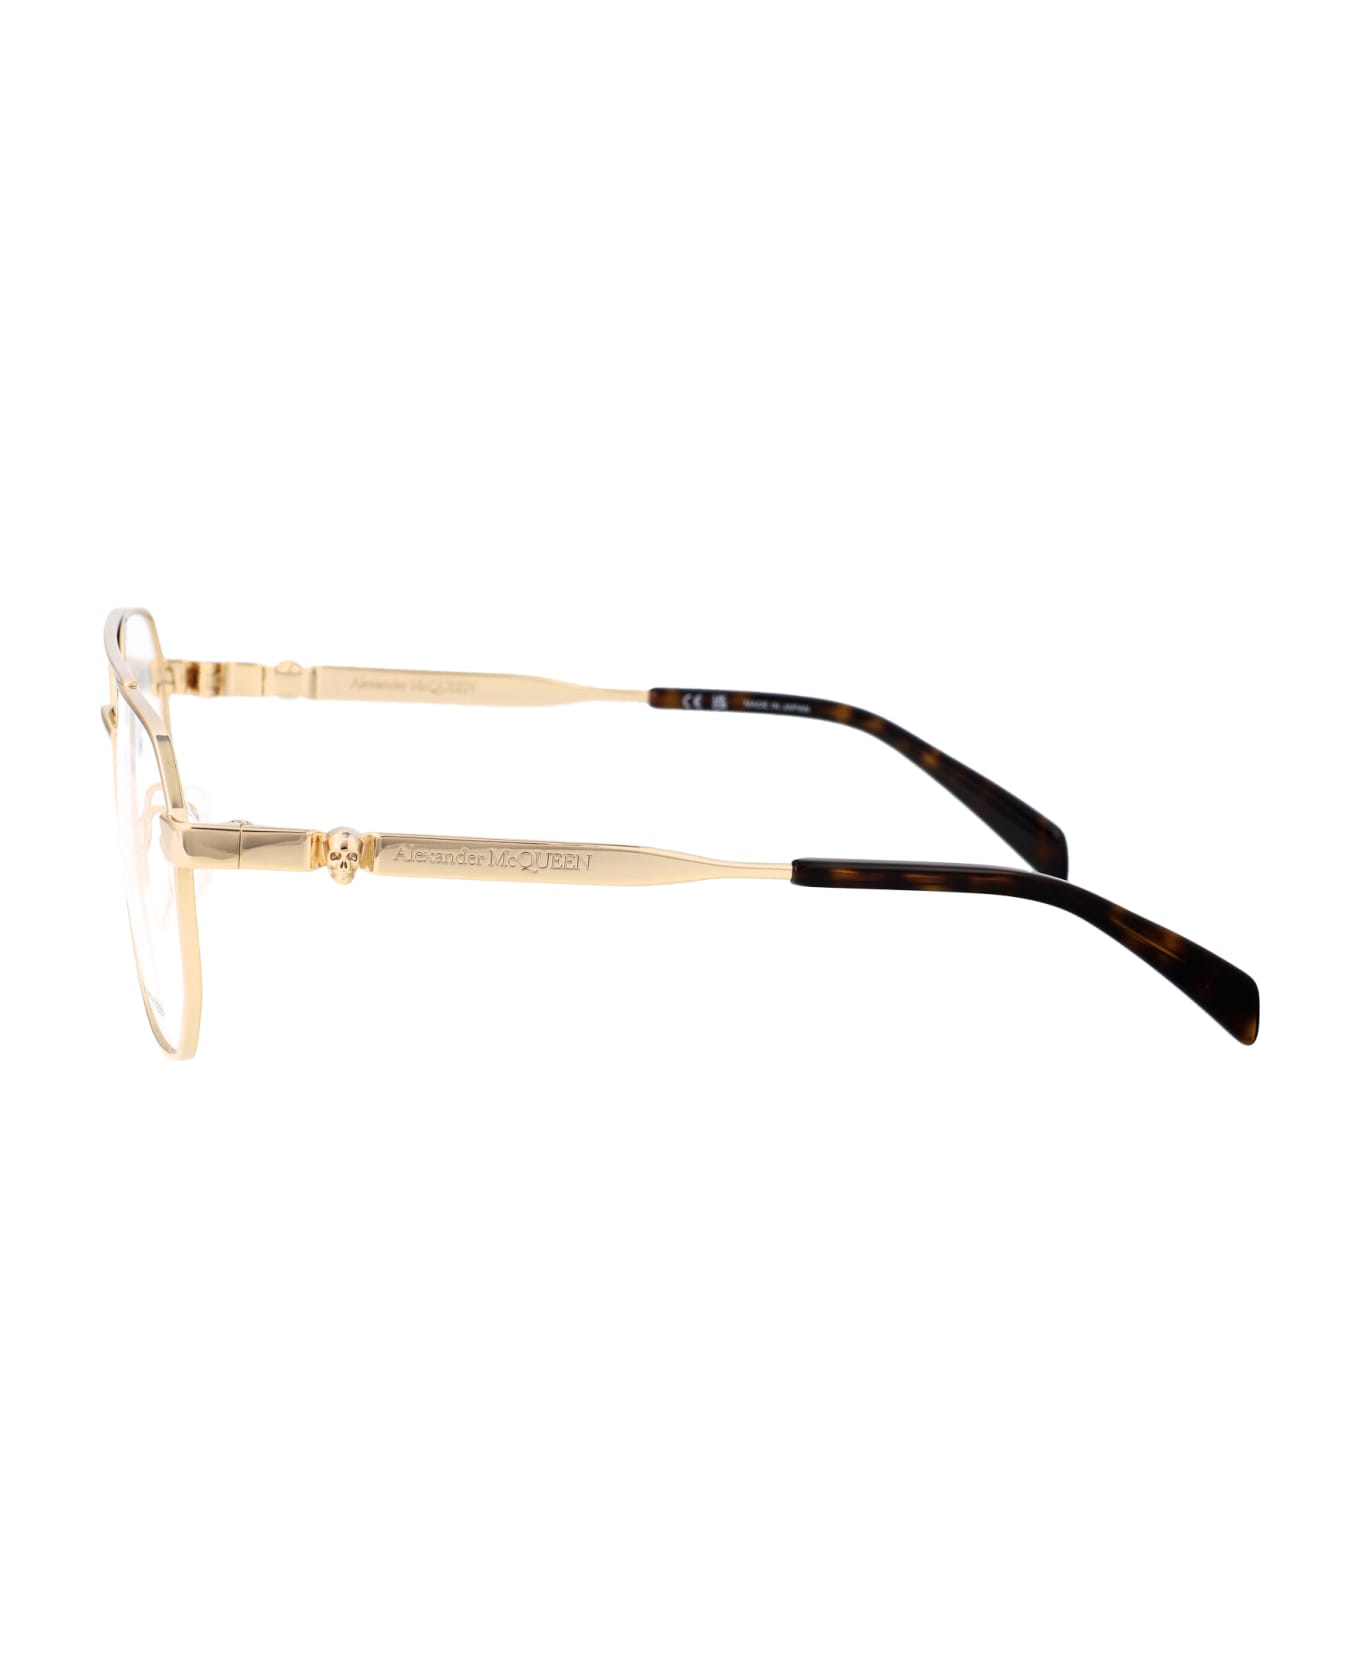 Alexander McQueen Eyewear Am0459o Glasses - 002 GOLD GOLD TRANSPARENT アイウェア